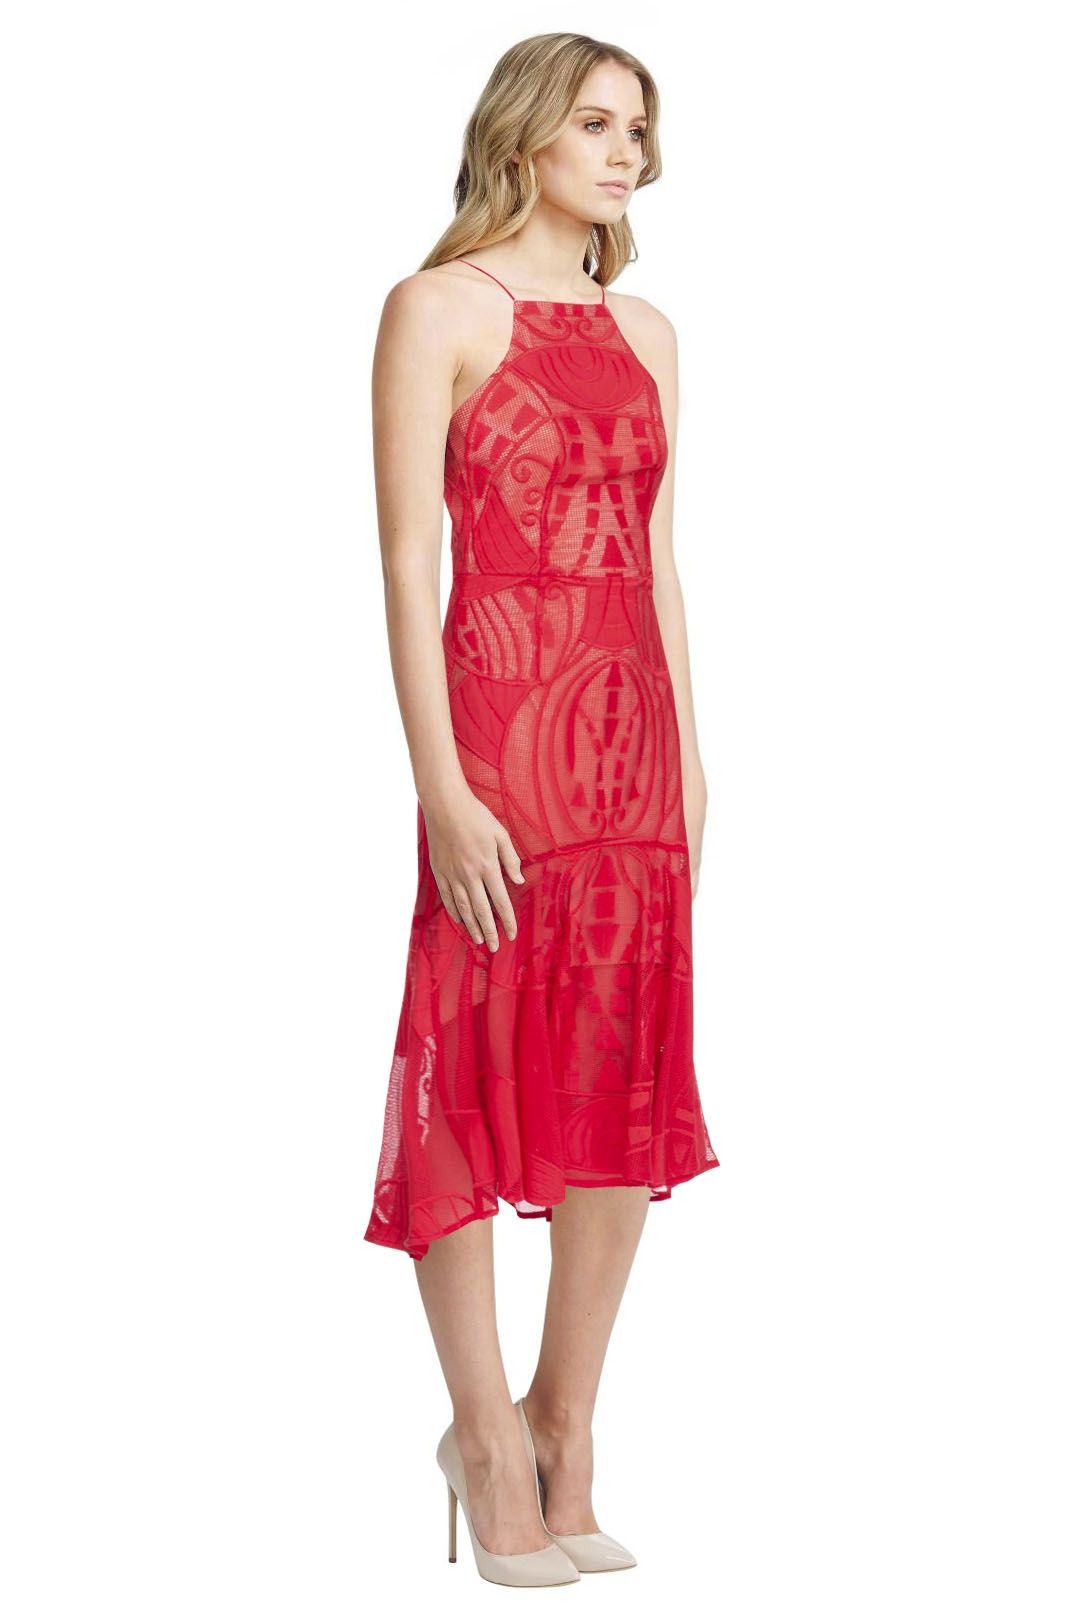 Thurley - Red Tabitha Dress for Hire | GlamCorner